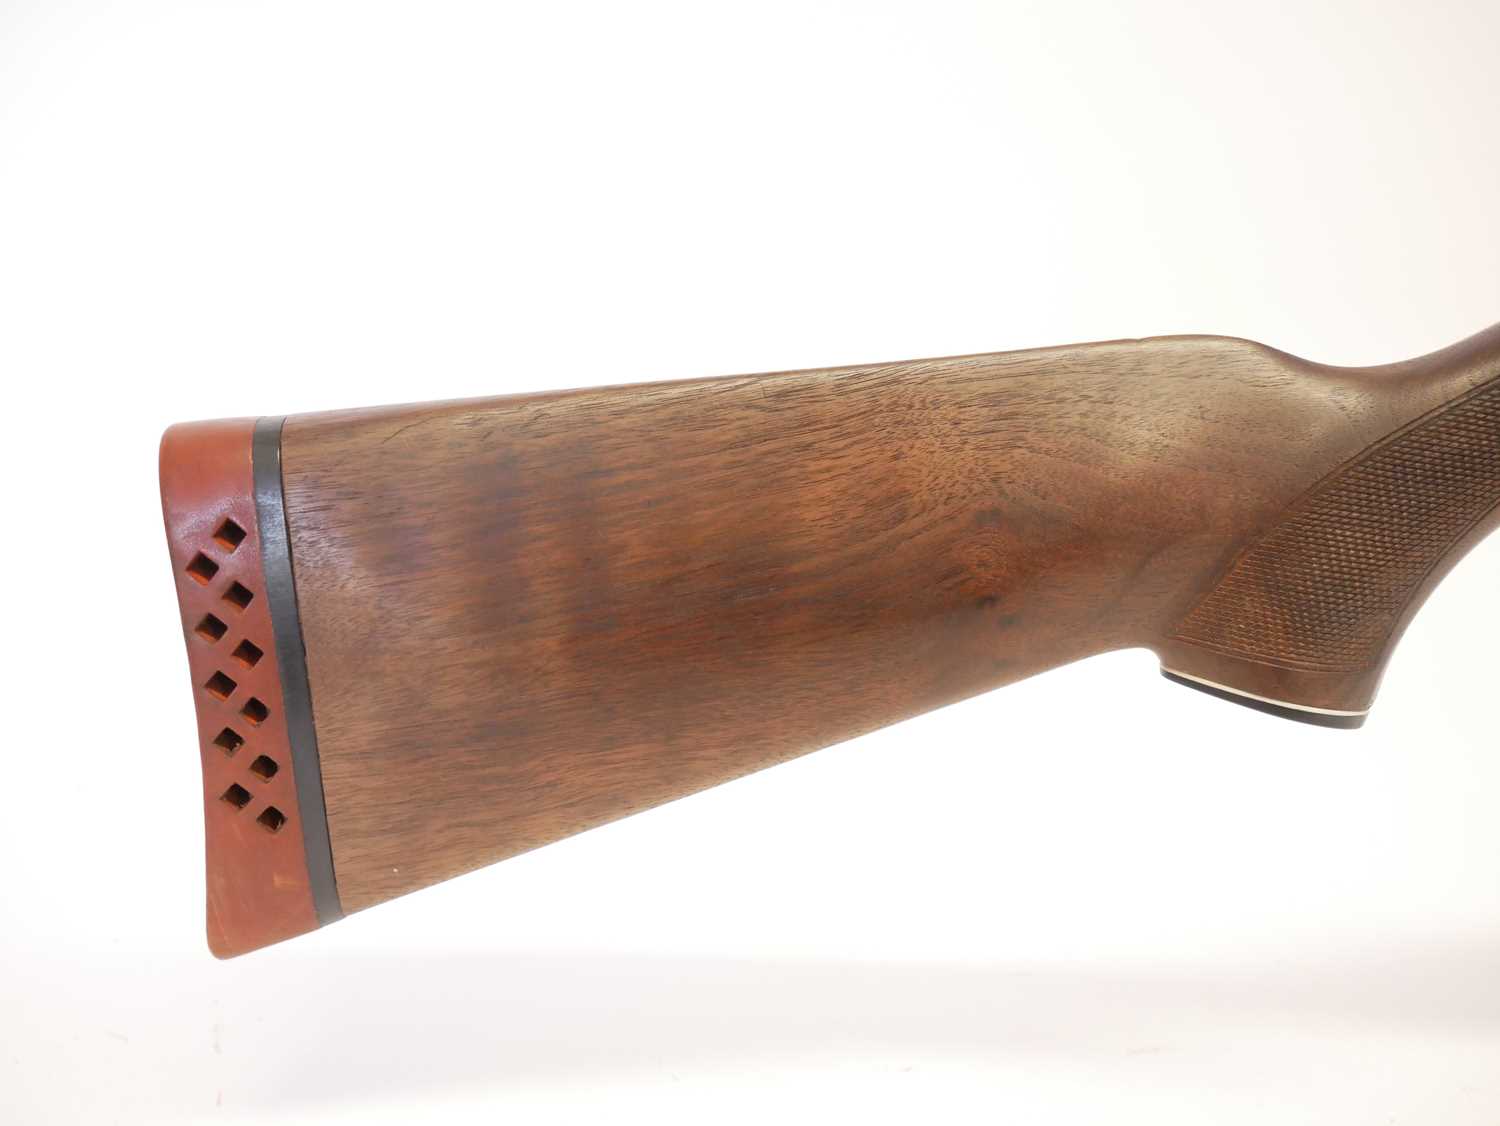 Remington left hand 12 bore semi auto shotgun, serial numberL786134V, Model 1100LH, 25inch barrel - Image 11 of 15